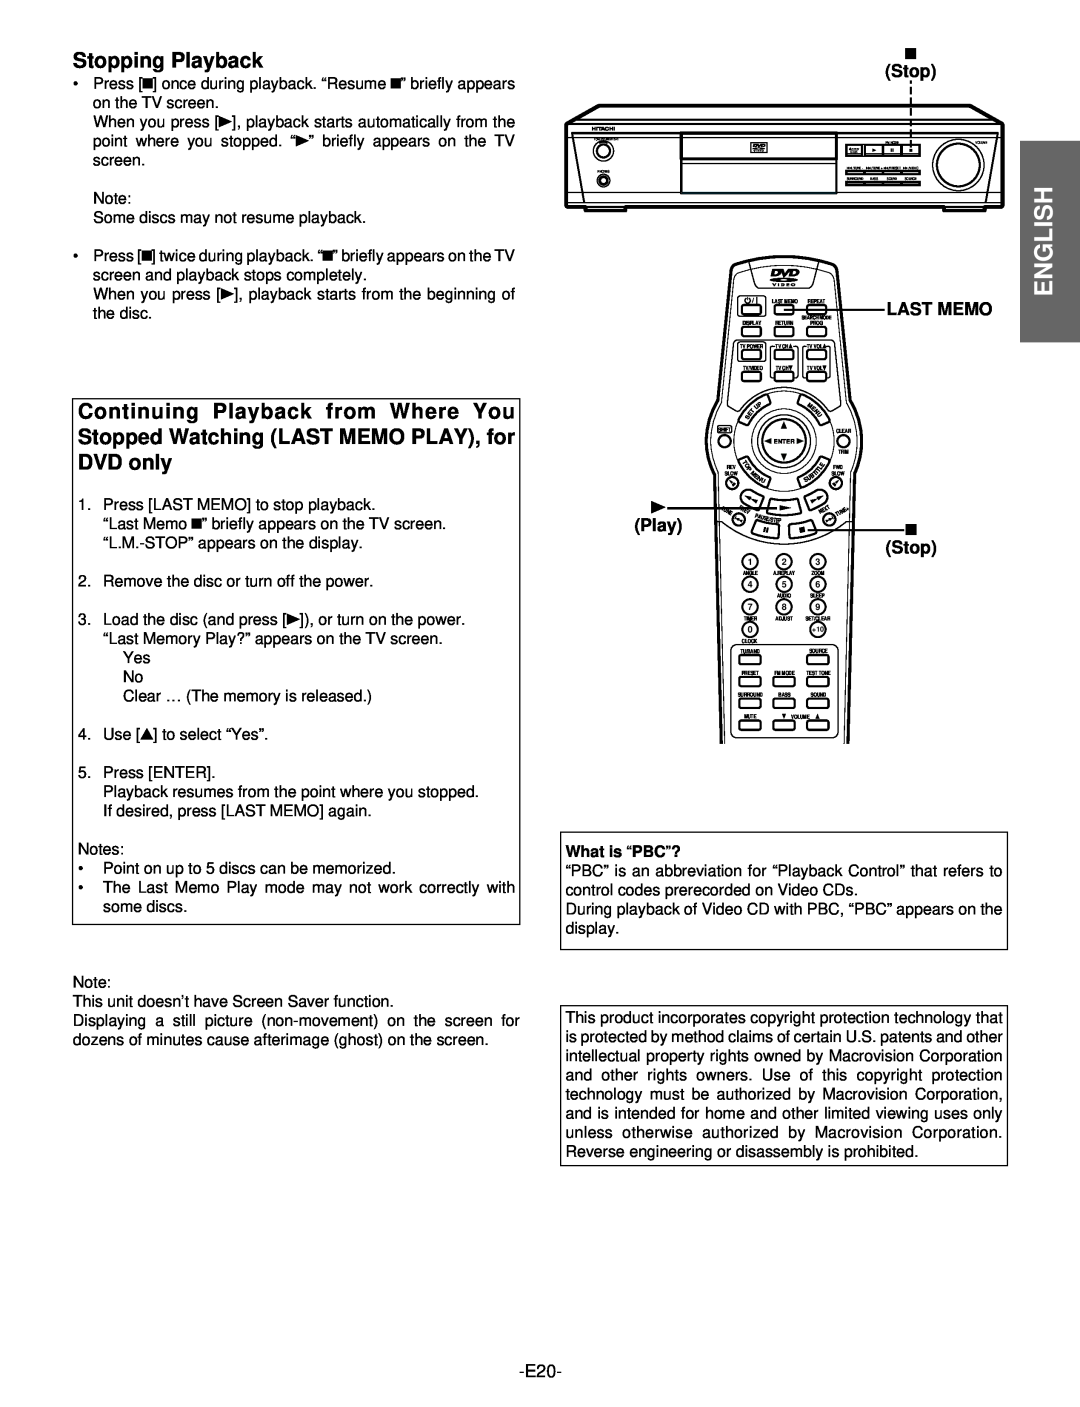 Hitachi DV-S522U instruction manual Stopping Playback, English, Last Memo, What is “PBC”? 